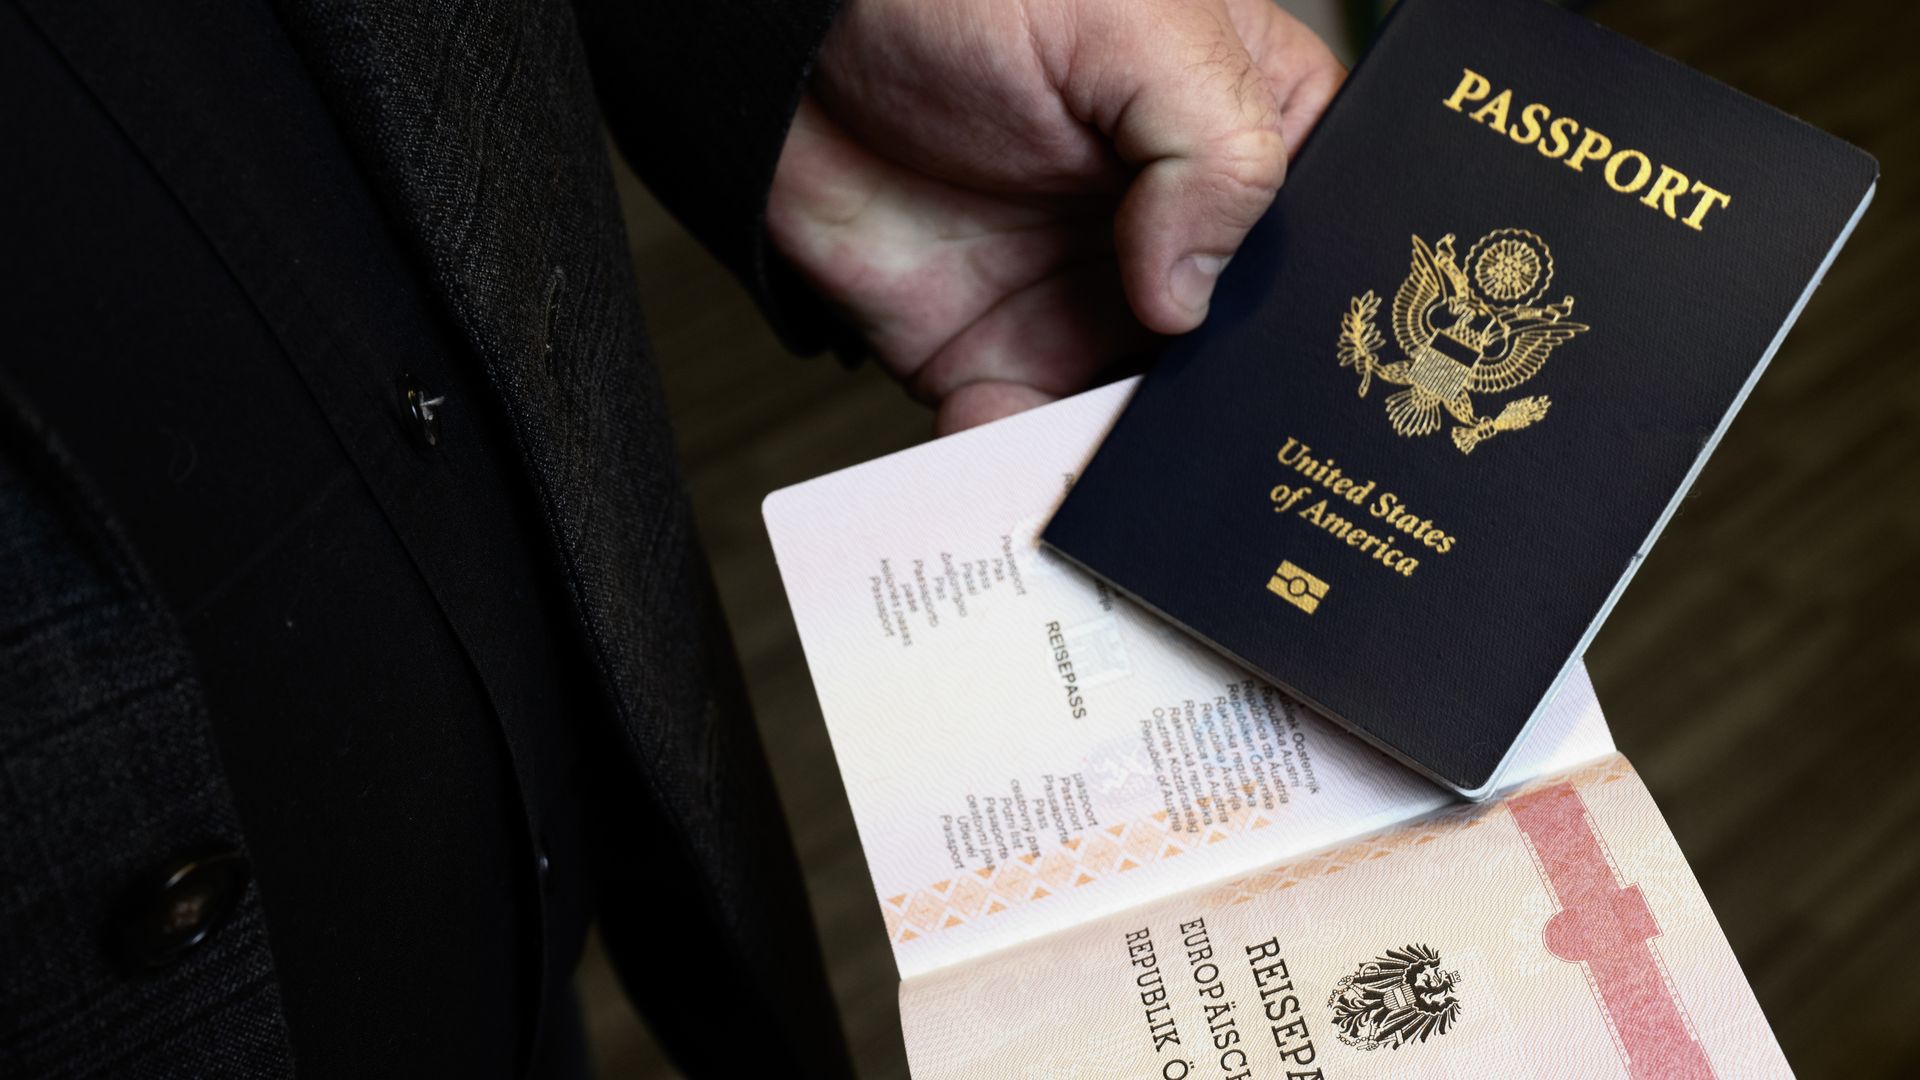 German and U.S. passports